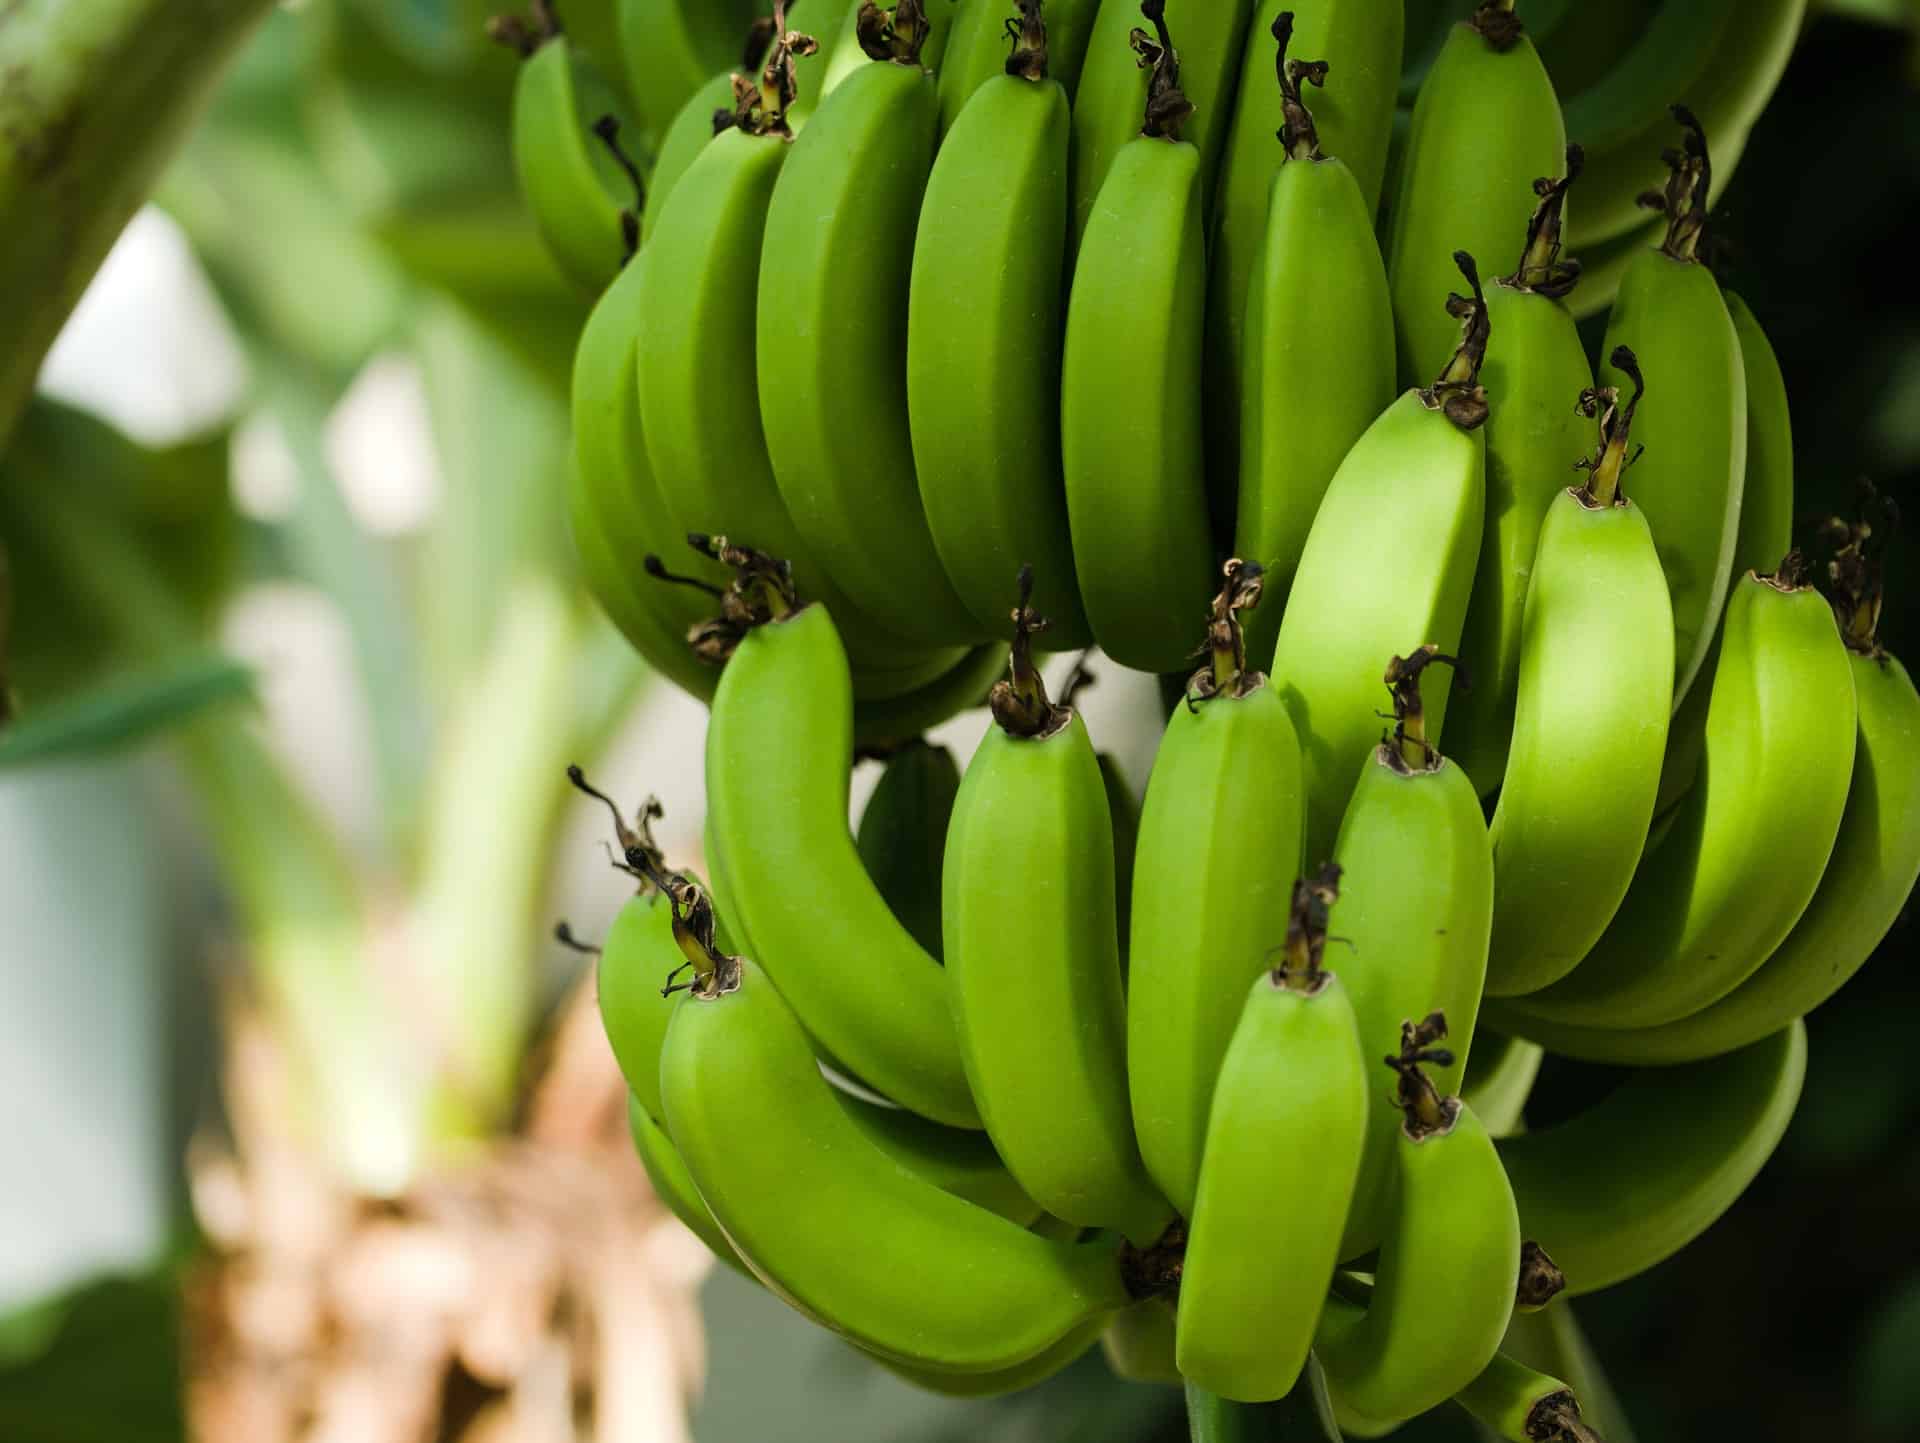 Uganda's new banana economy: upcycling banana waste to rugs, wigs, packaging and more